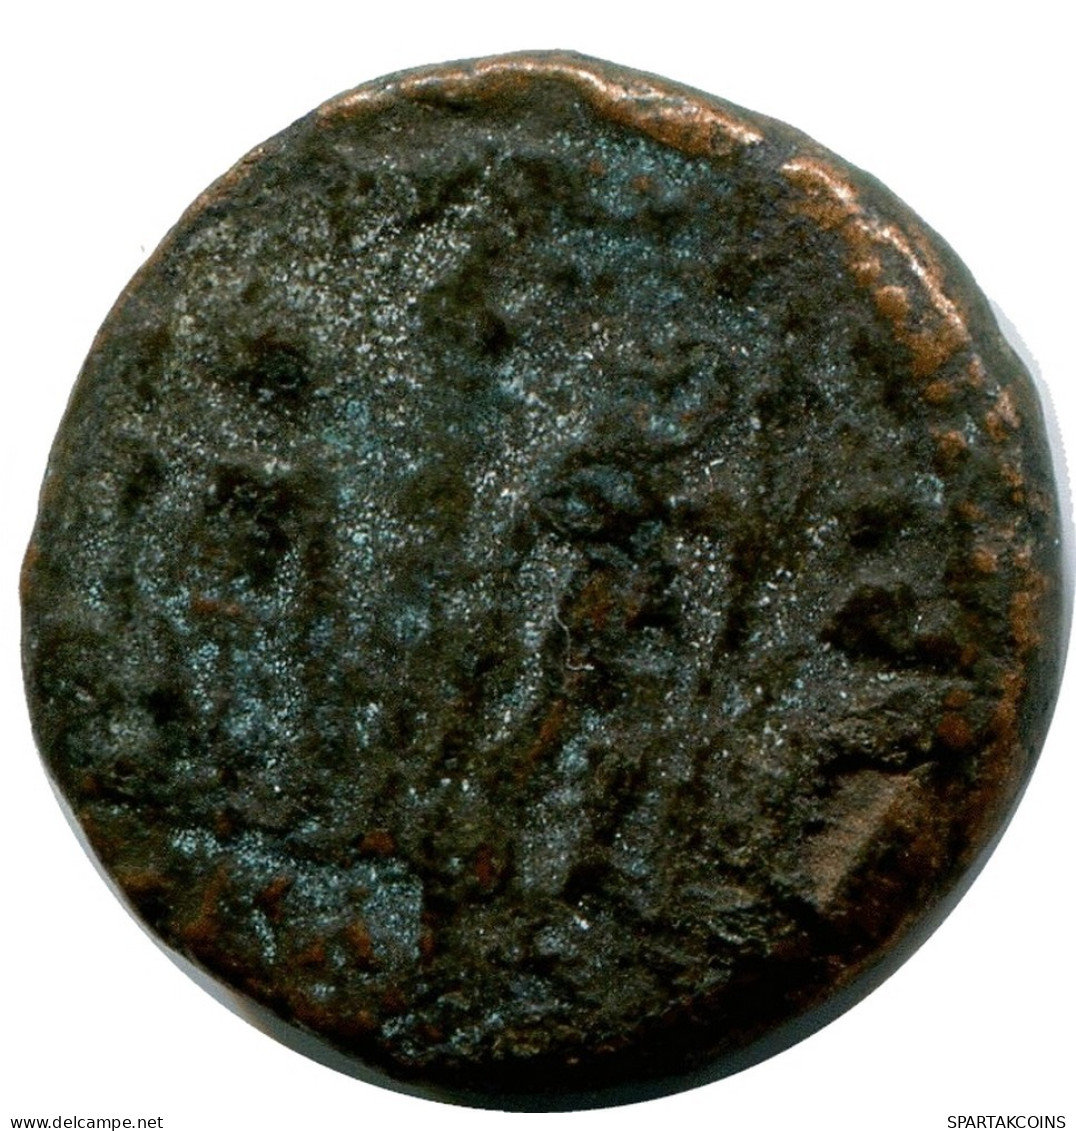 ROMAN Coin MINTED IN ALEKSANDRIA FOUND IN IHNASYAH HOARD EGYPT #ANC10146.14.U.A - El Imperio Christiano (307 / 363)